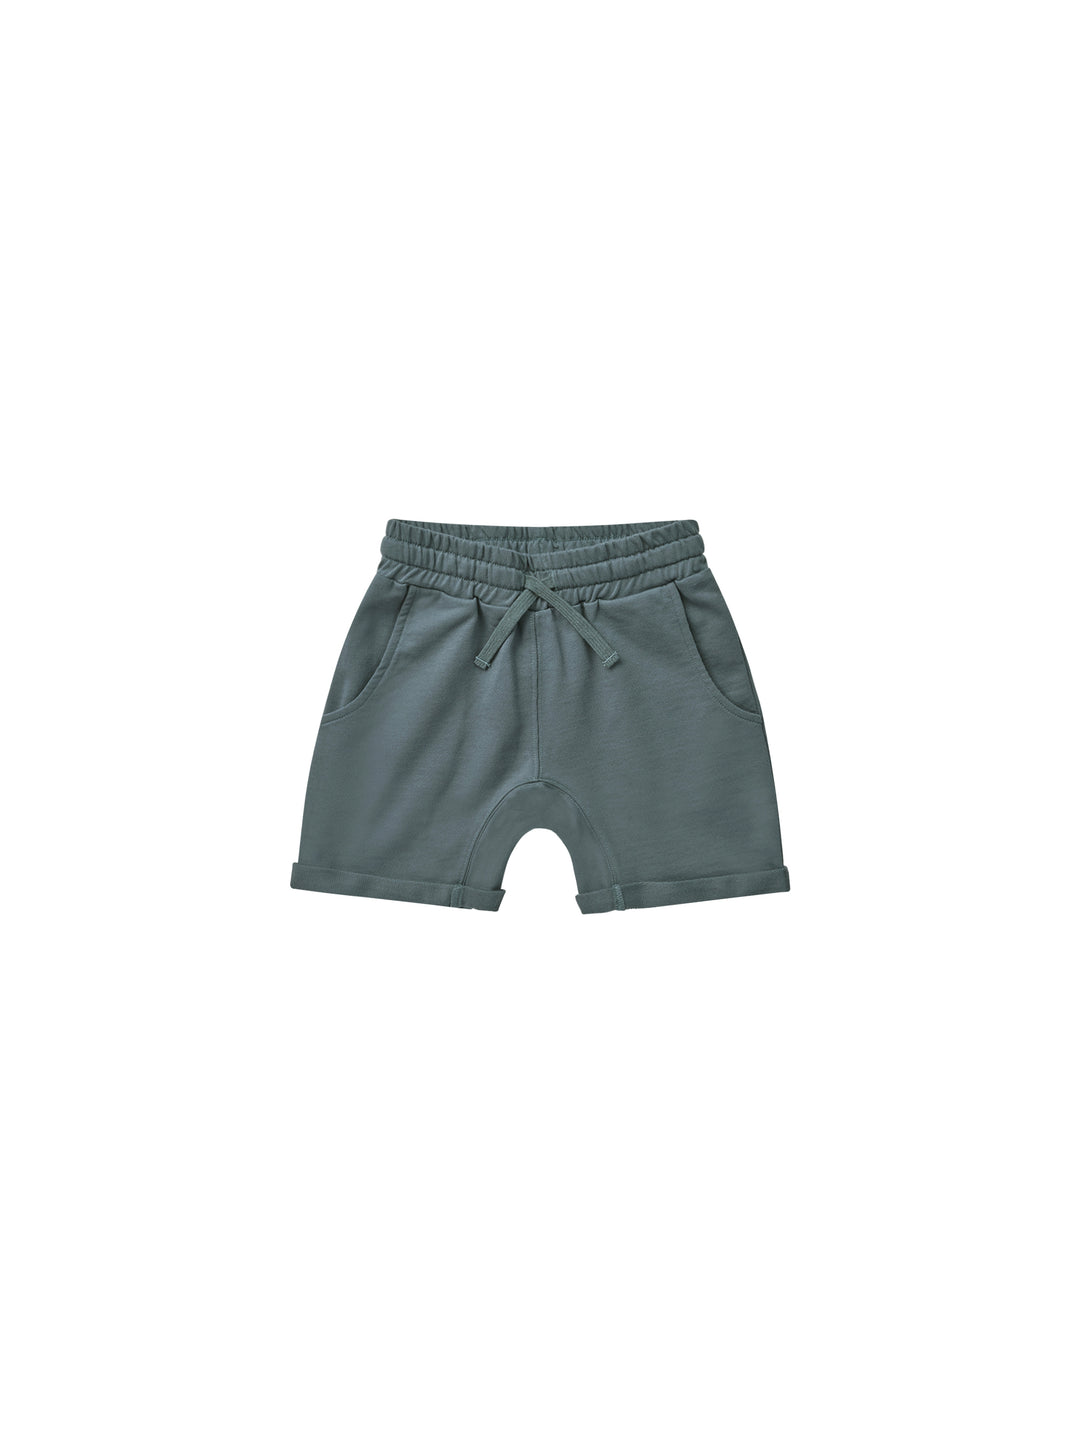 Indigo Shorts by Rylee and Cru